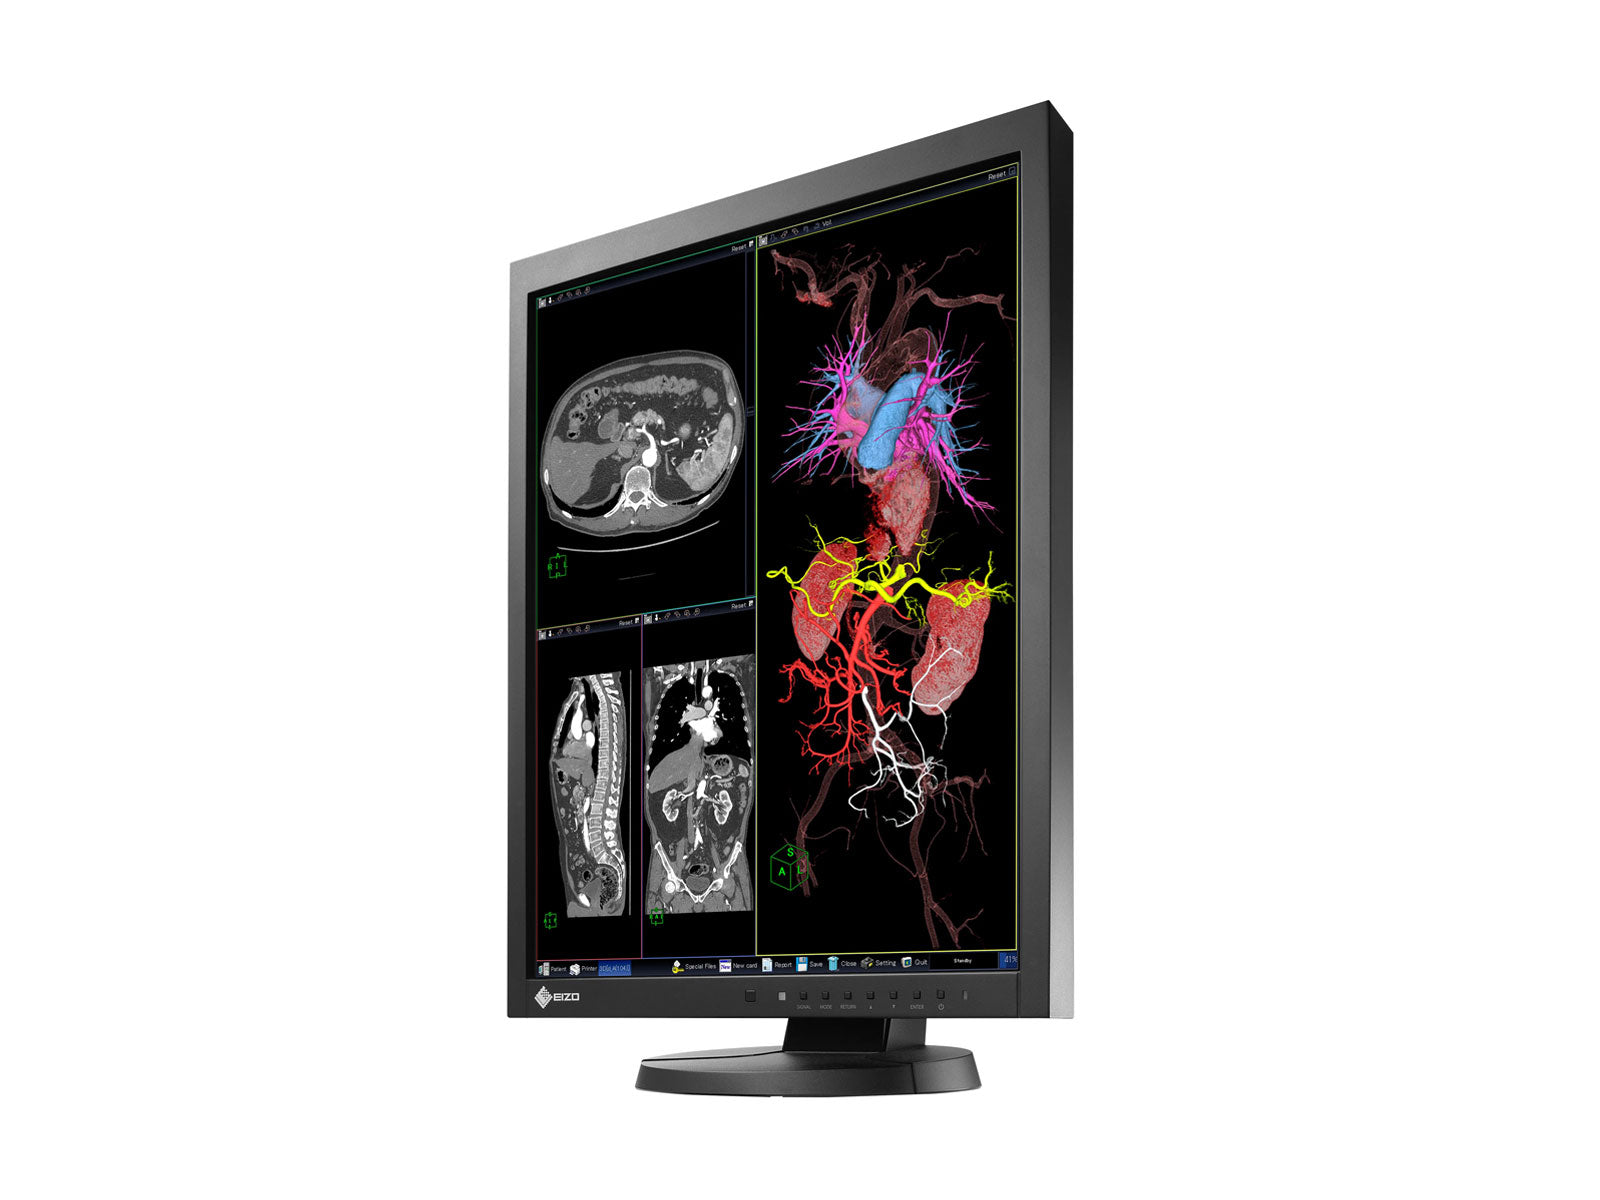 Eizo RadiForce MX215 2MP 21" Color LCD Diagnostic Radiology Display Monitor (MX215-BK)